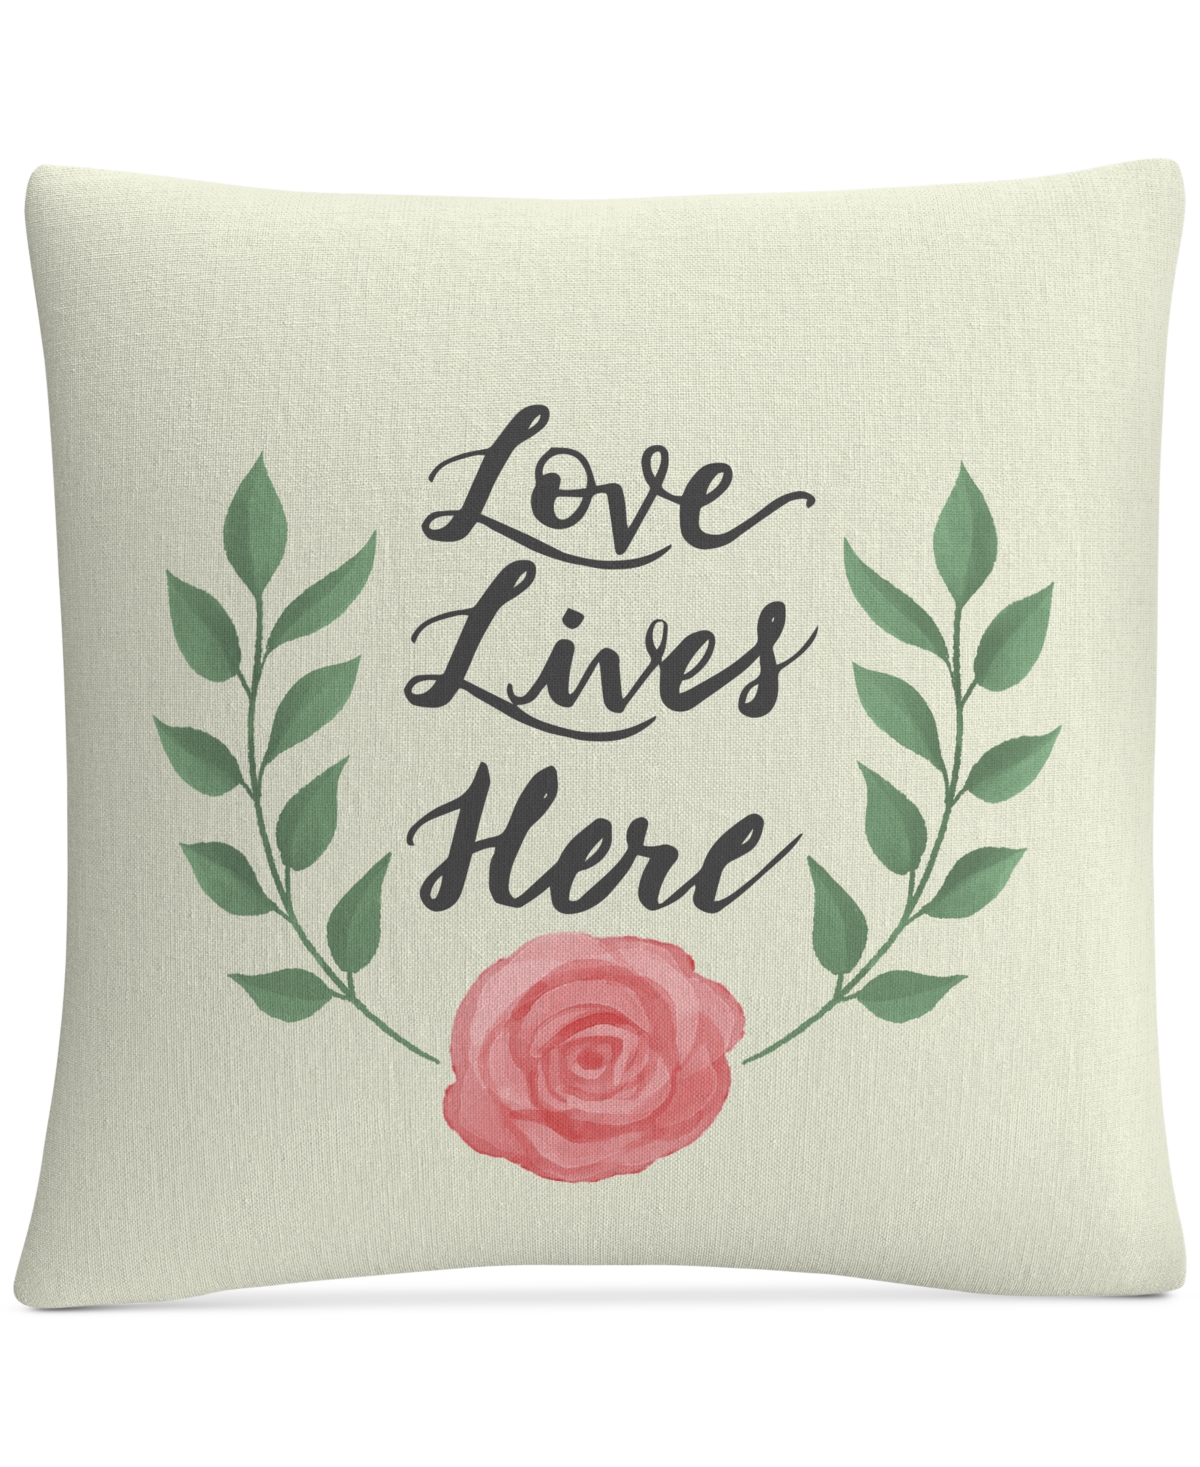 6938748 Abc Love Lives Here Decorative Pillow, 16 x 16 sku 6938748